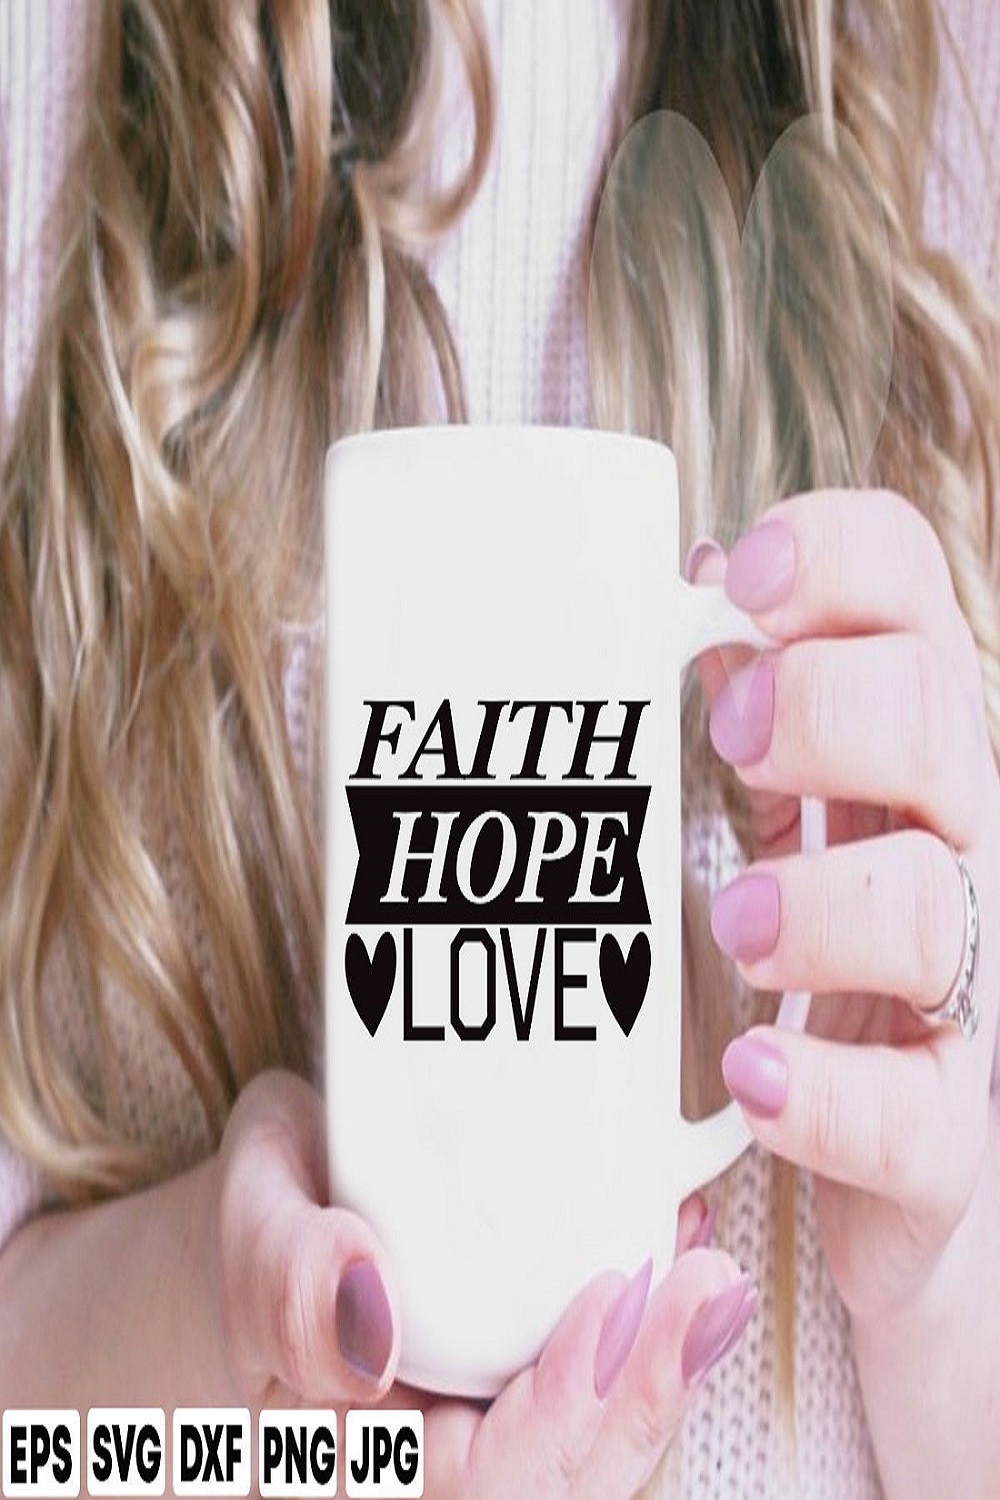 Faith Hope Love pinterest preview image.